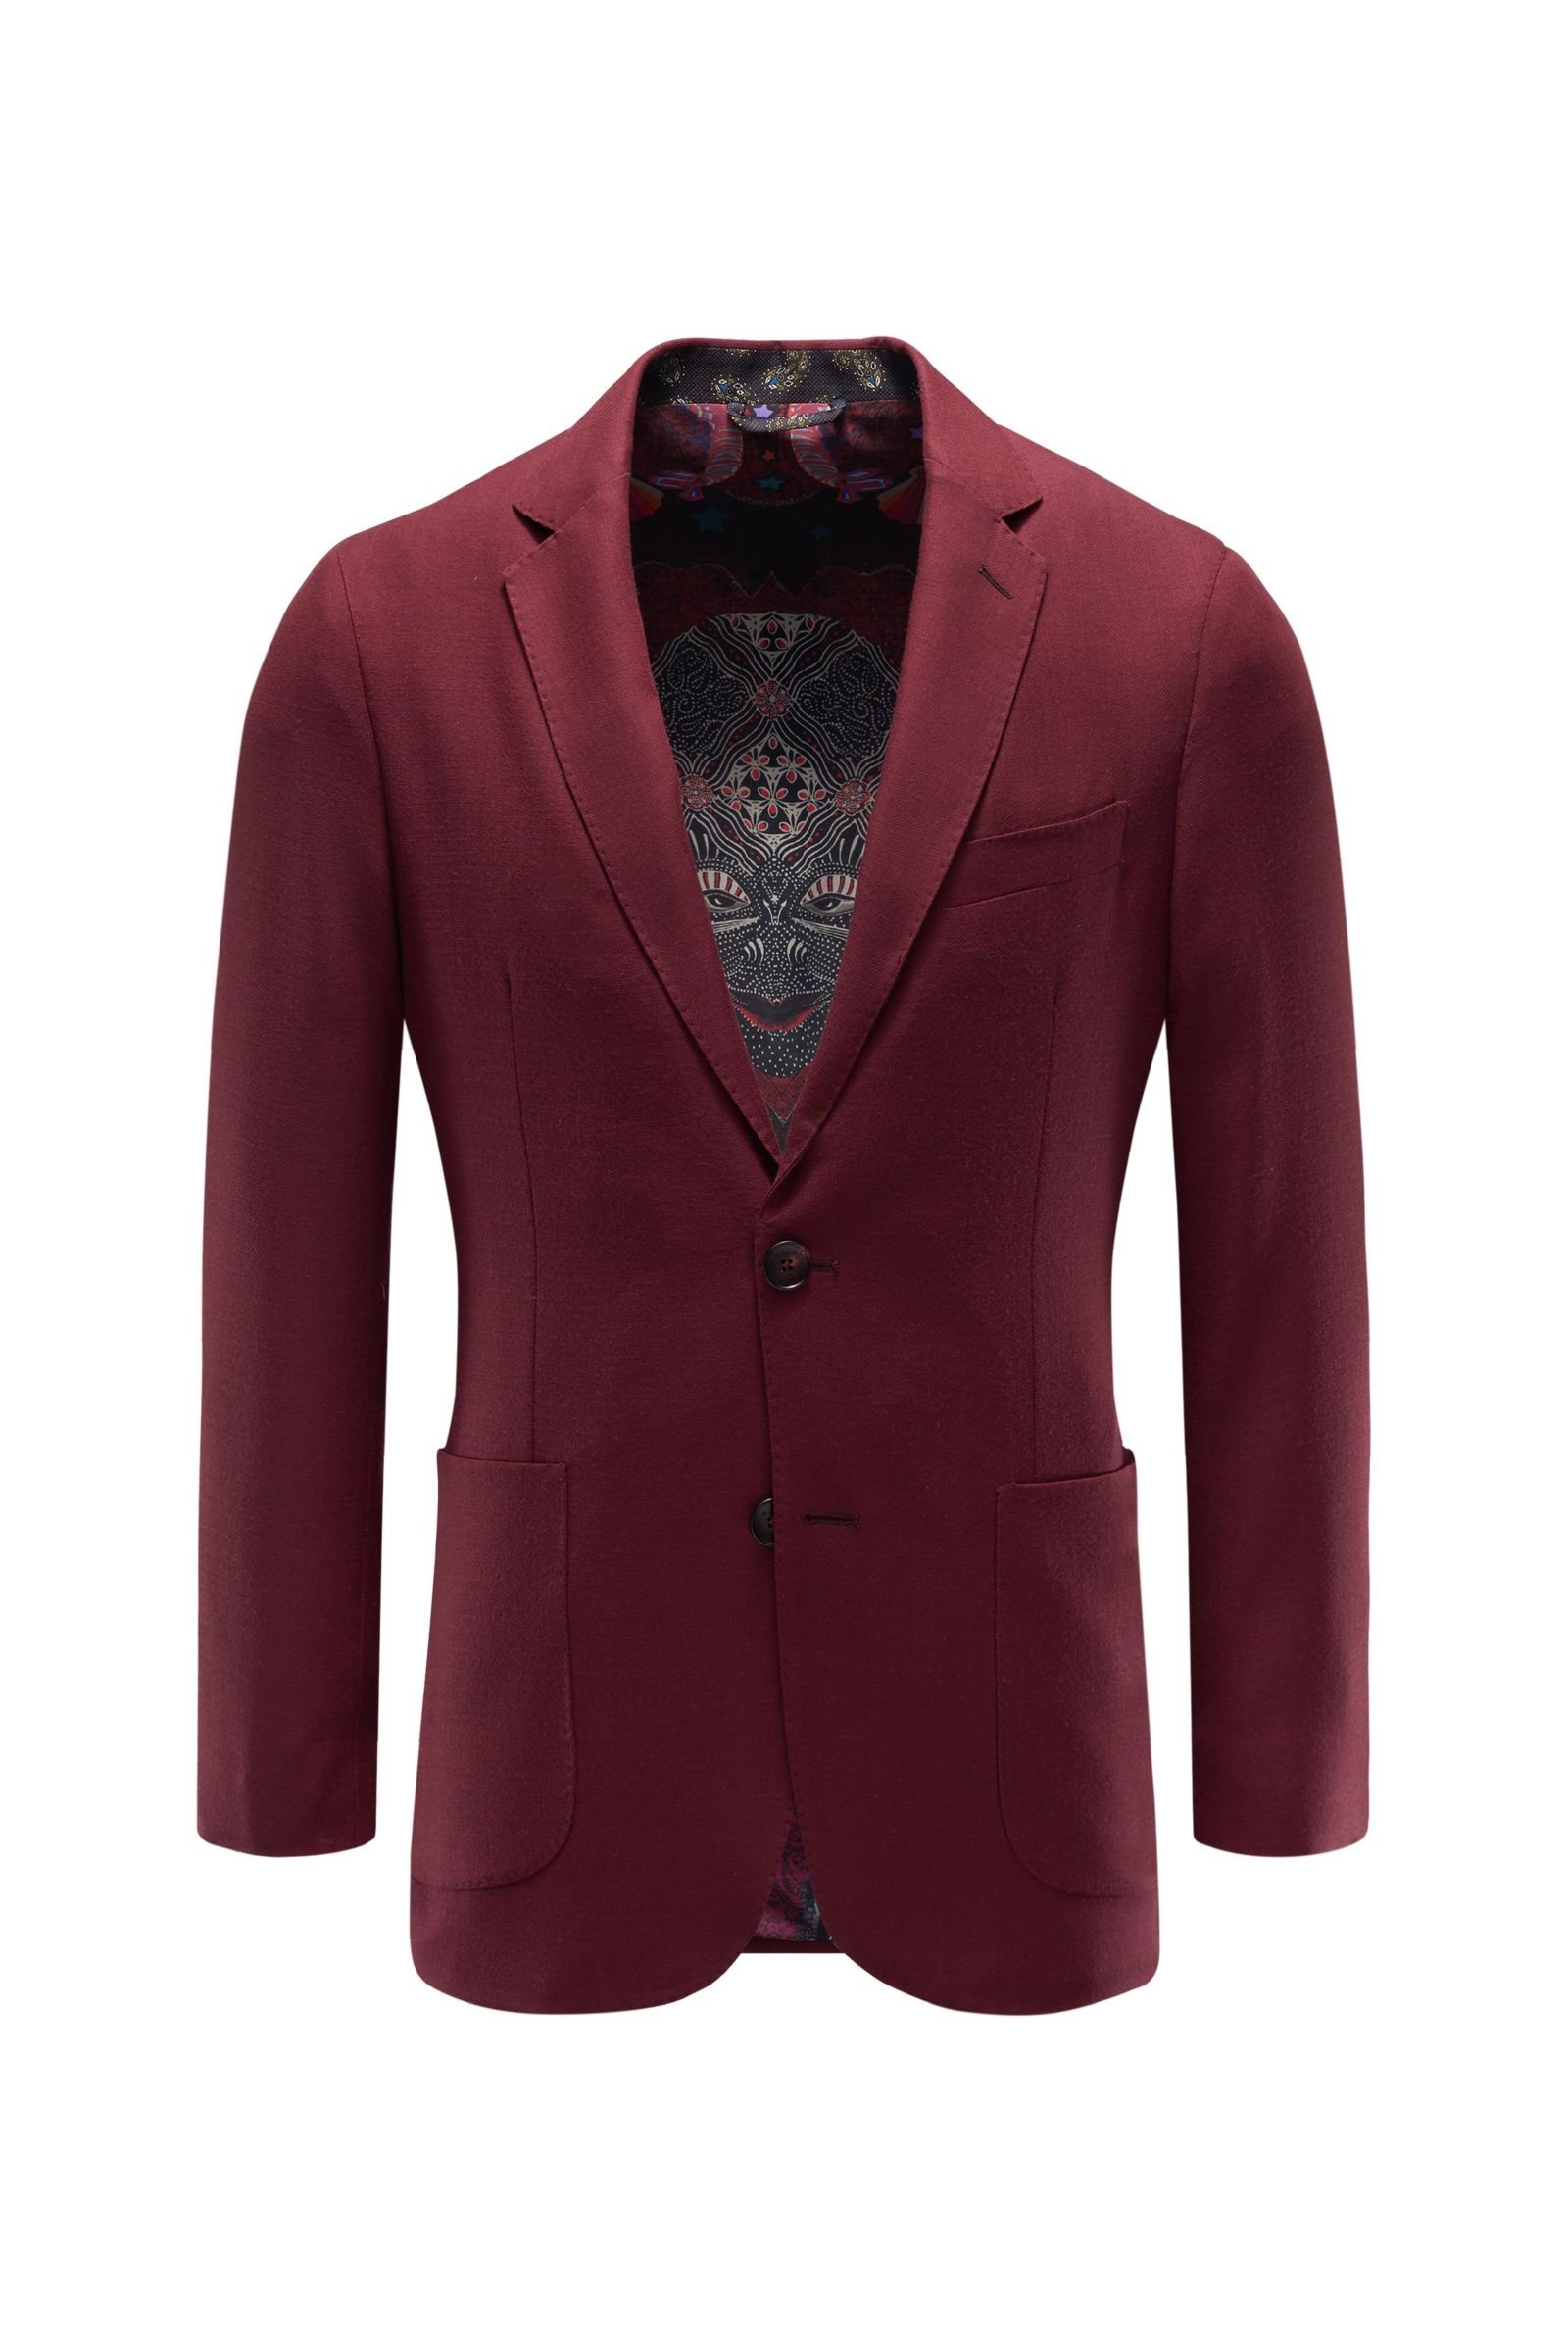 Cashmere smart-casual jacket burgundy